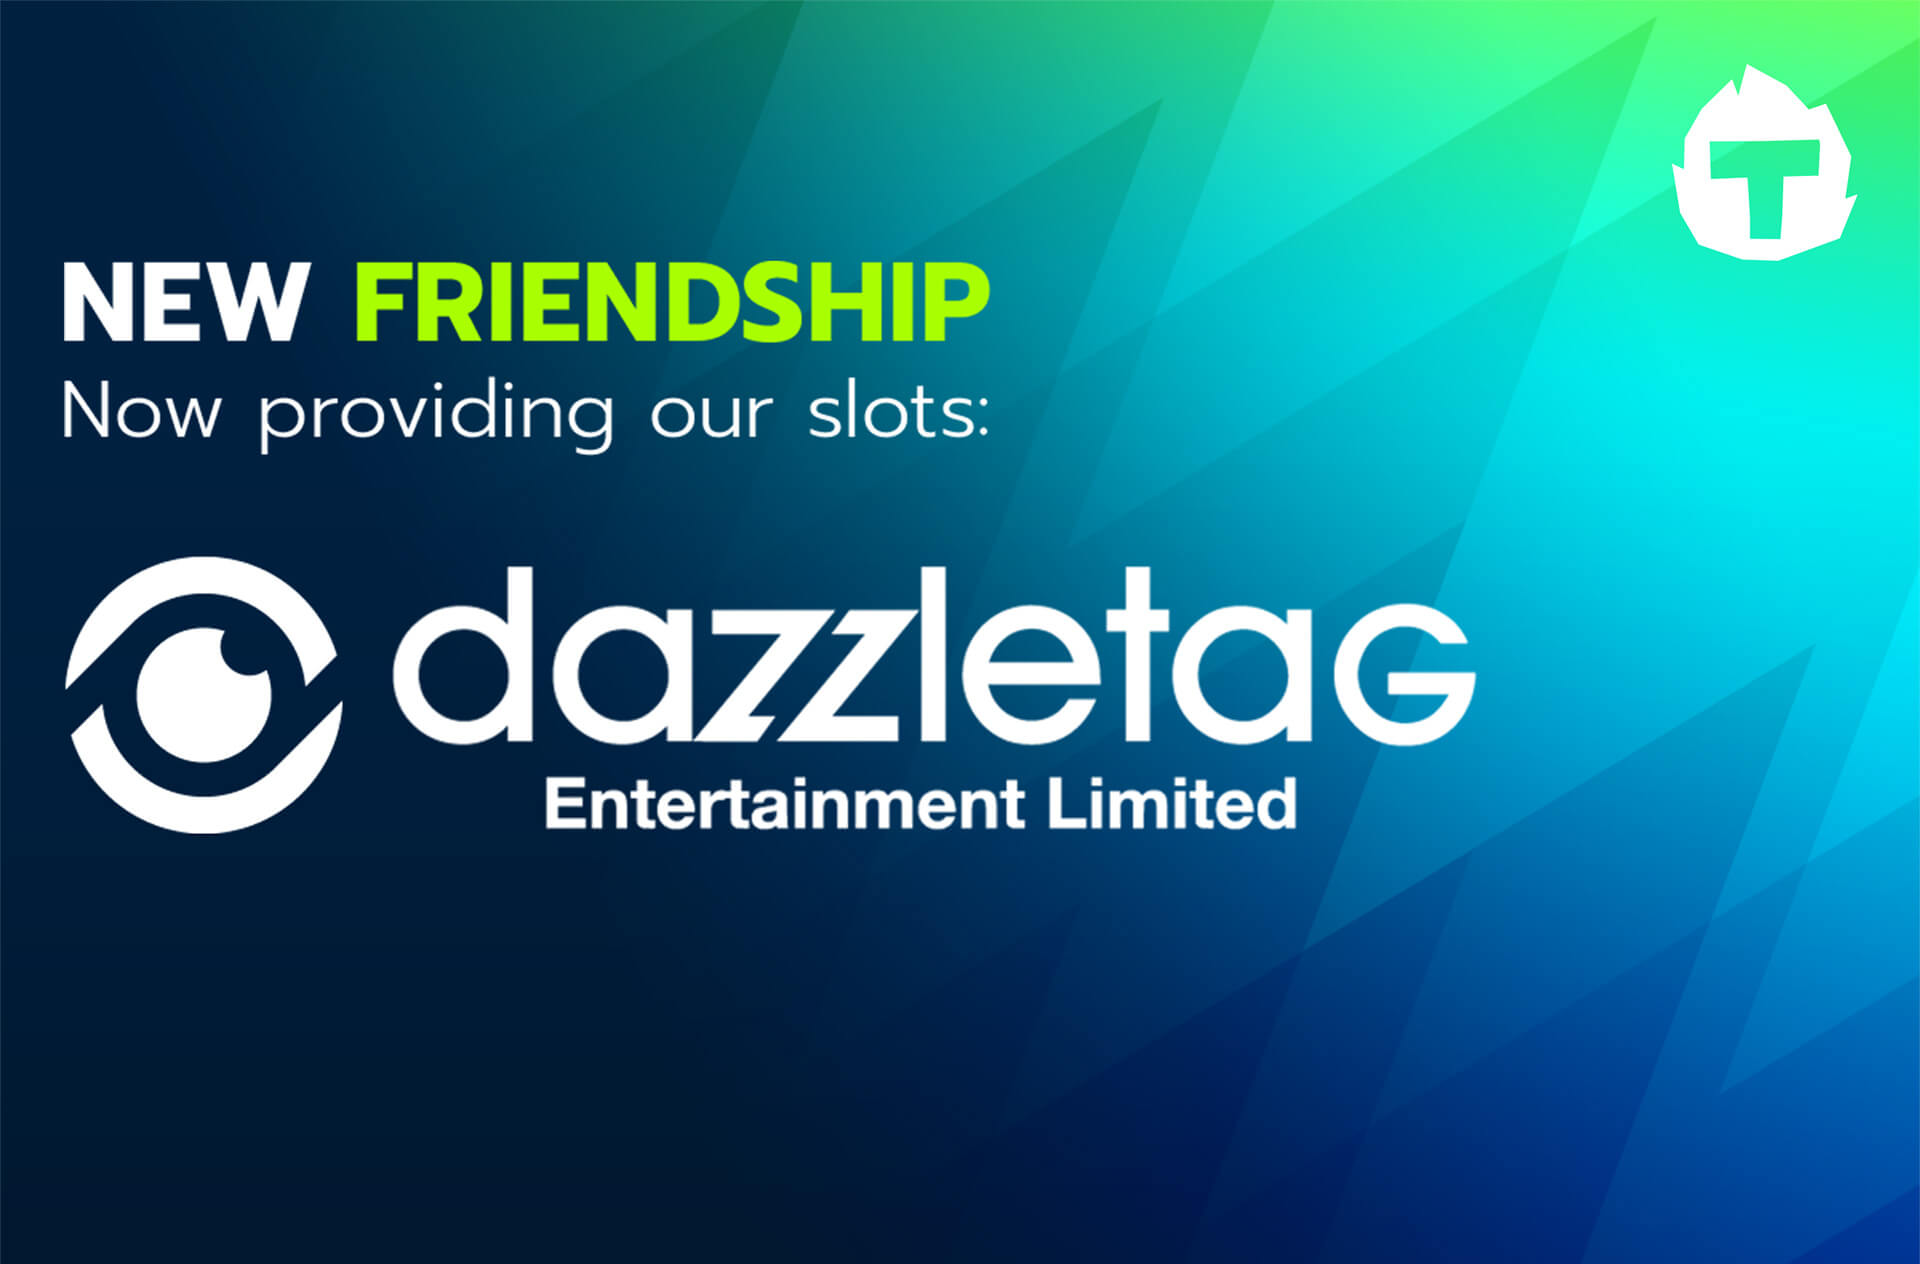 new friendship dazzletag